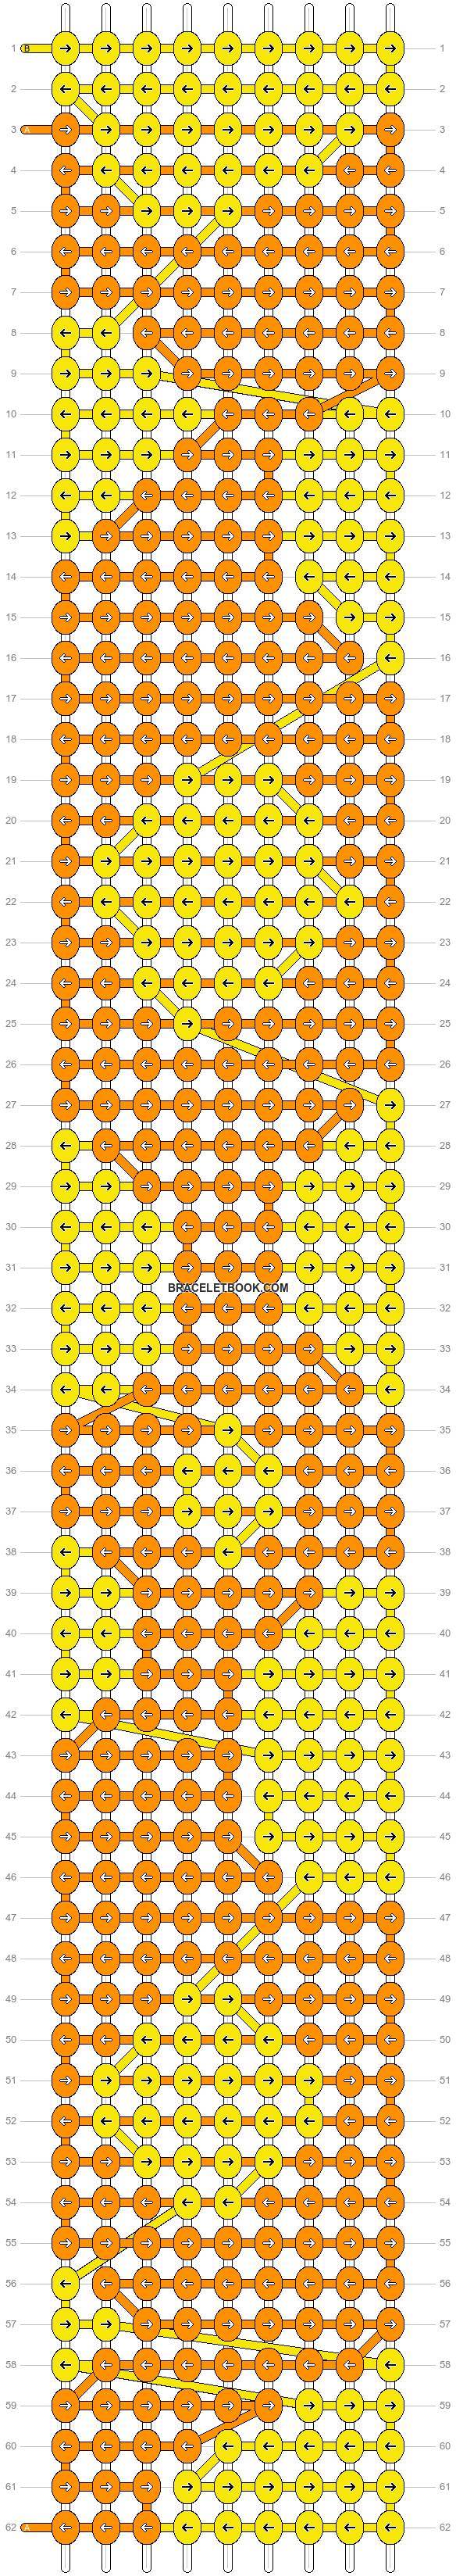 Alpha pattern #45106 variation #91035 pattern